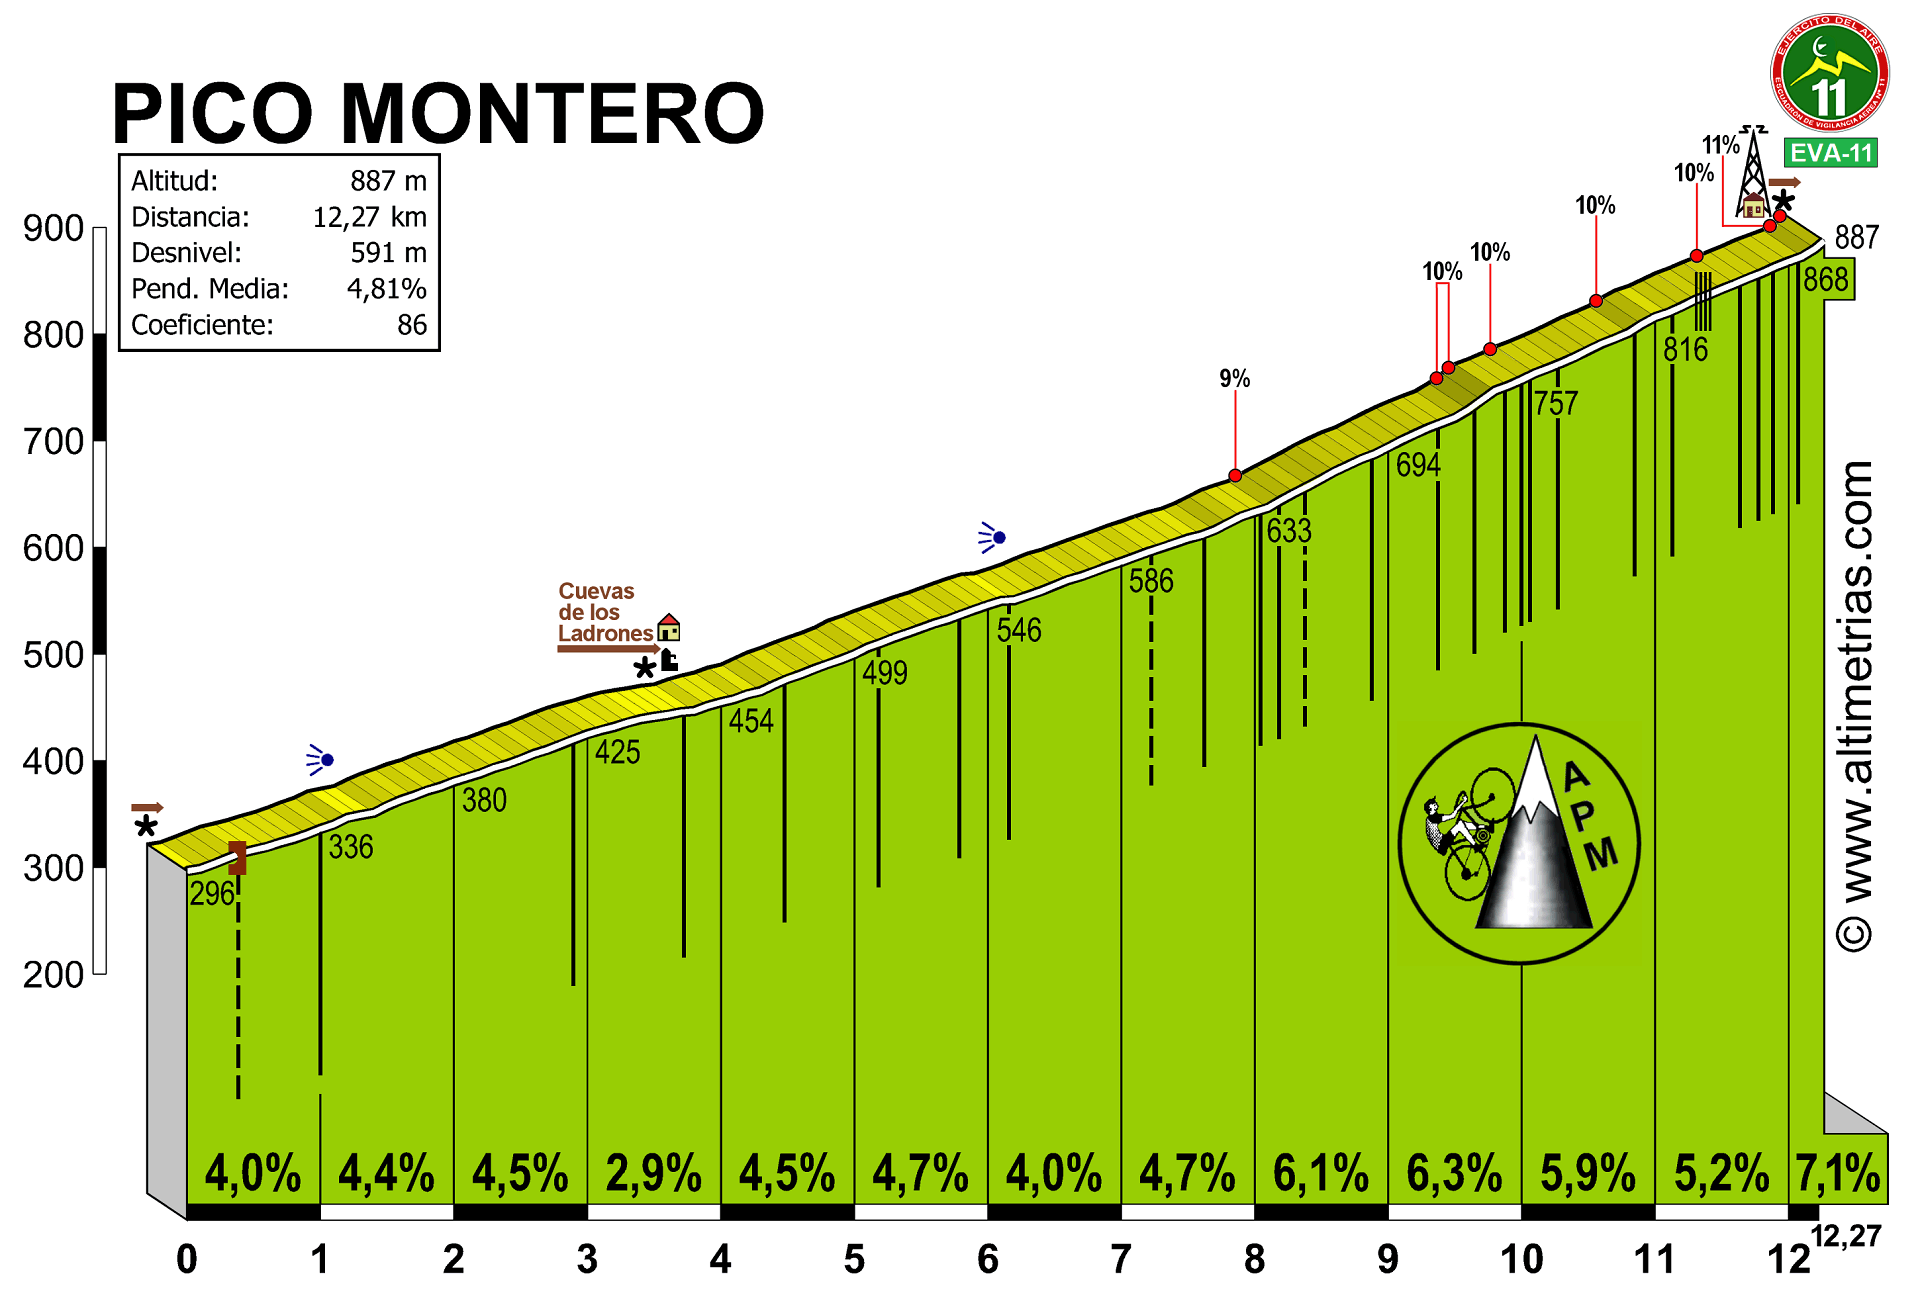 Pico Montero